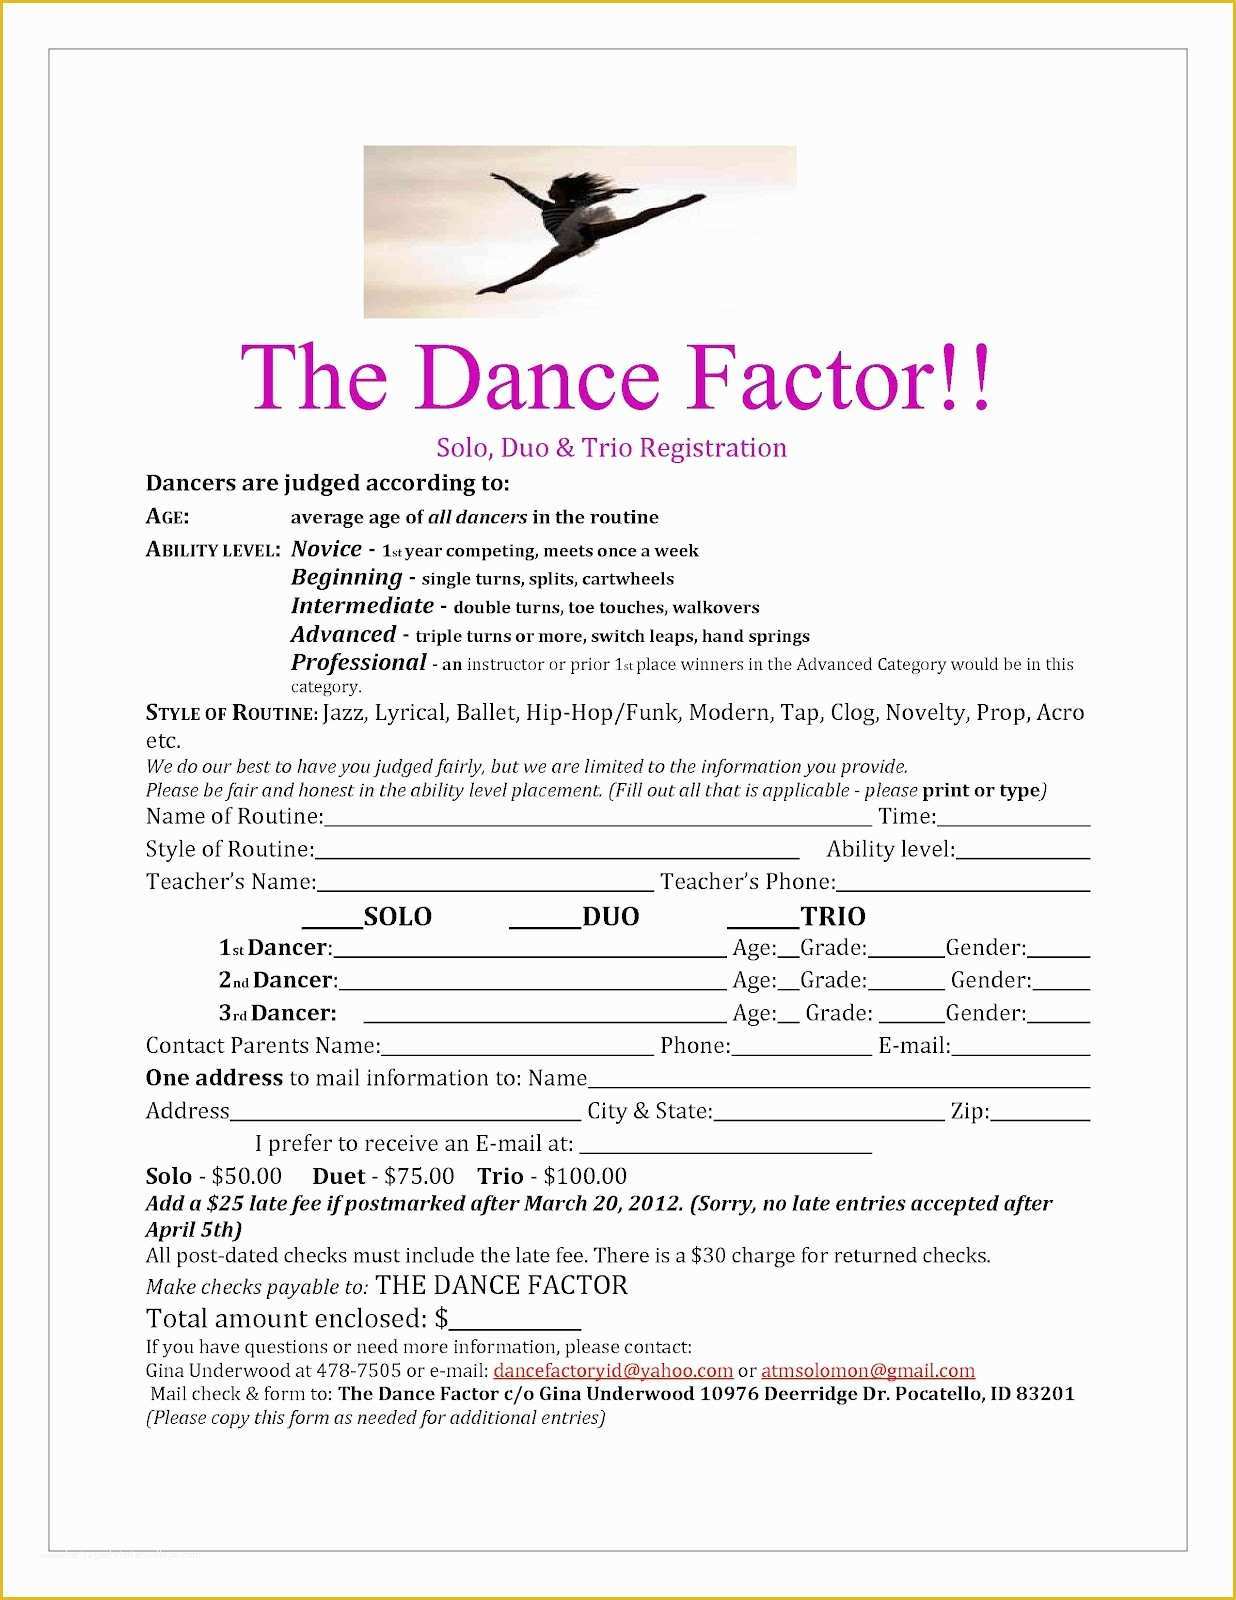 Dance Registration Form Template Free Of Eagle Rock Dance Dance Factor 